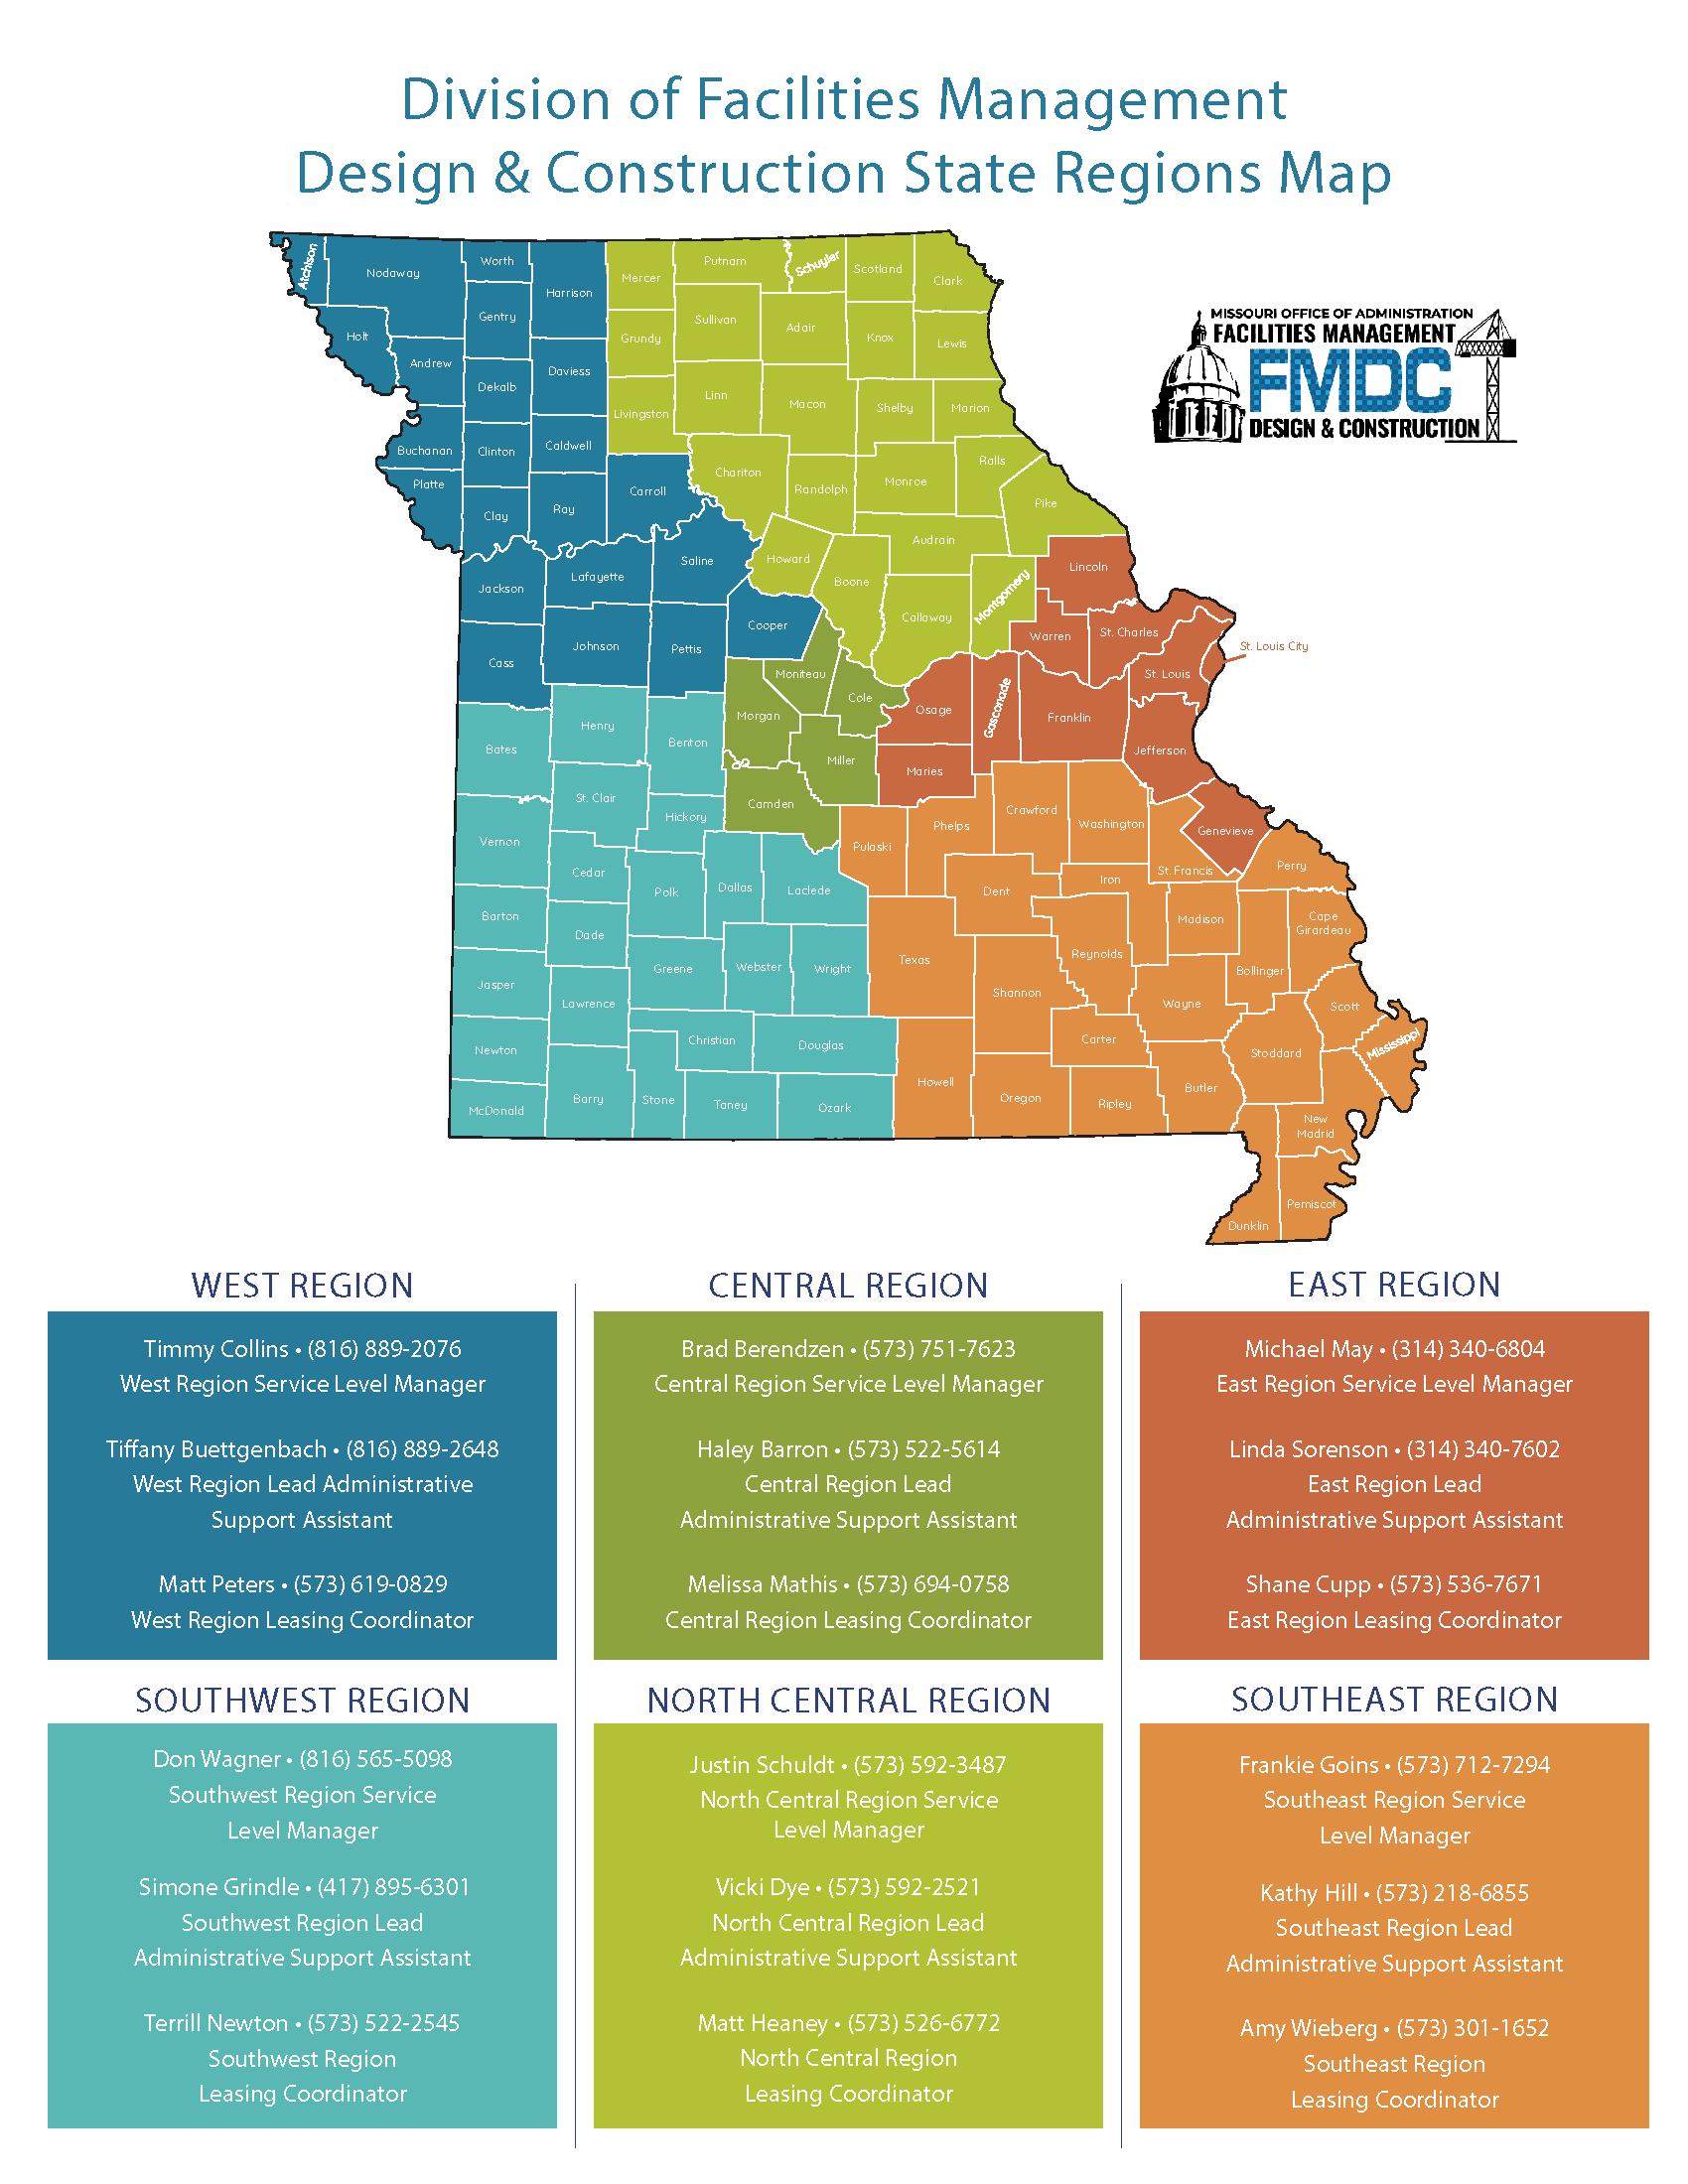 FMDC State Regions Map